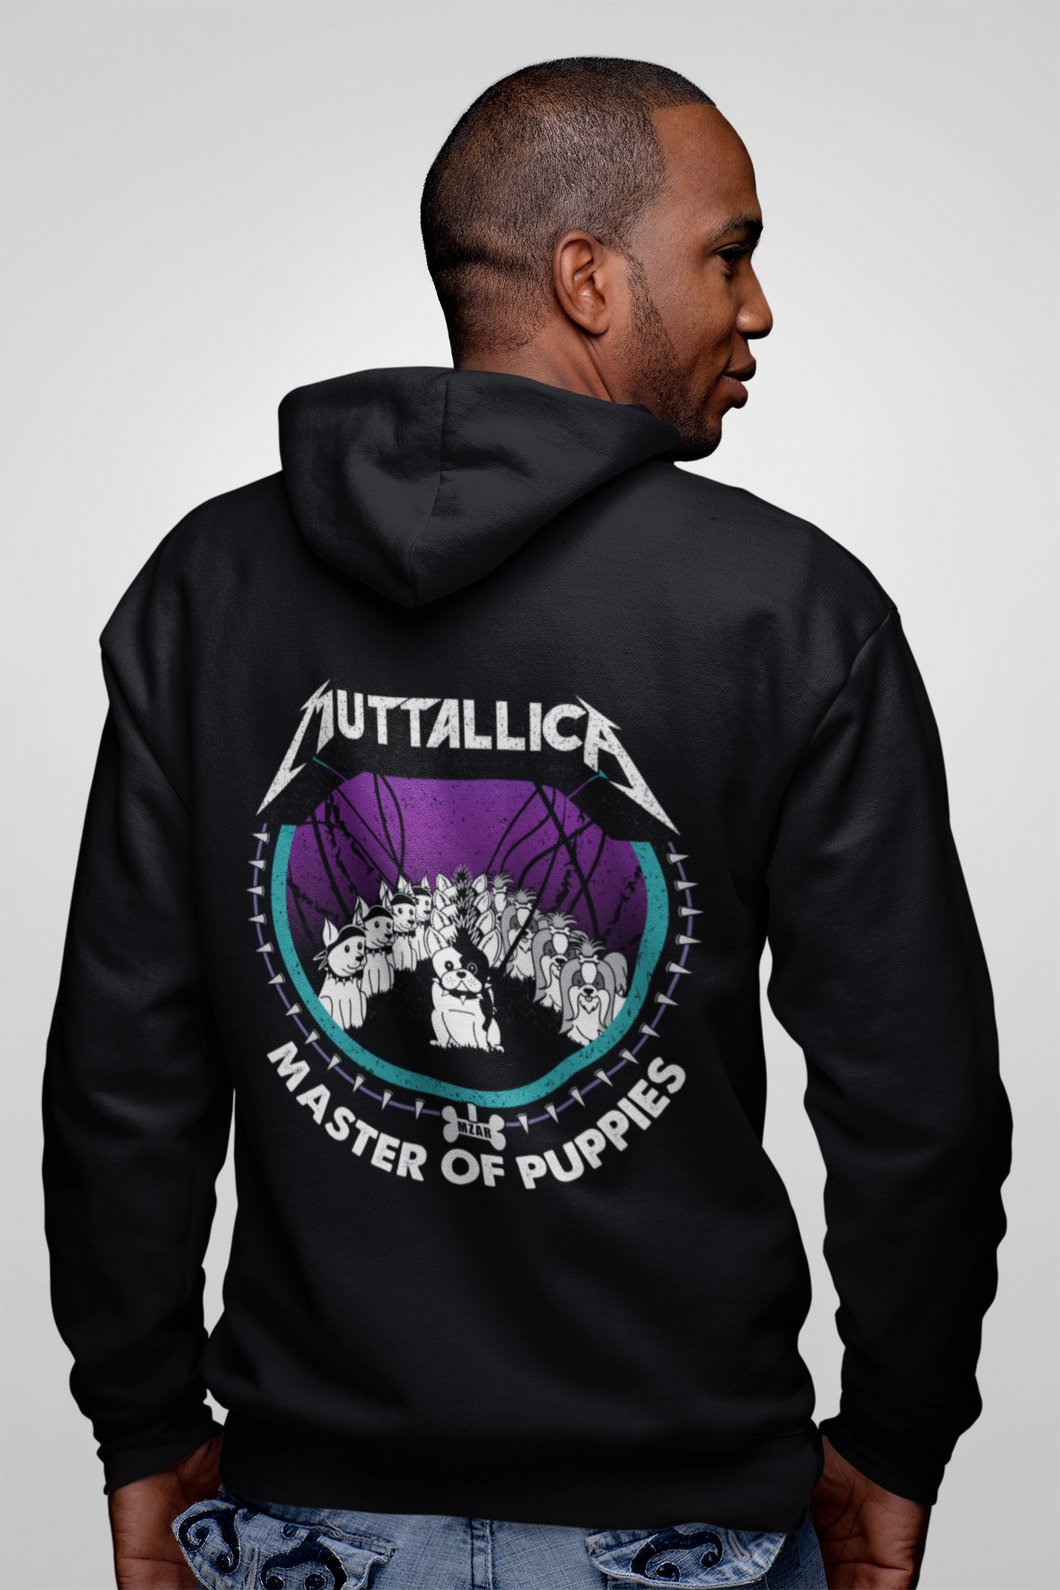 Muttallica v.2.0 Men's/Unisex Zip Front Hoodie (Black)